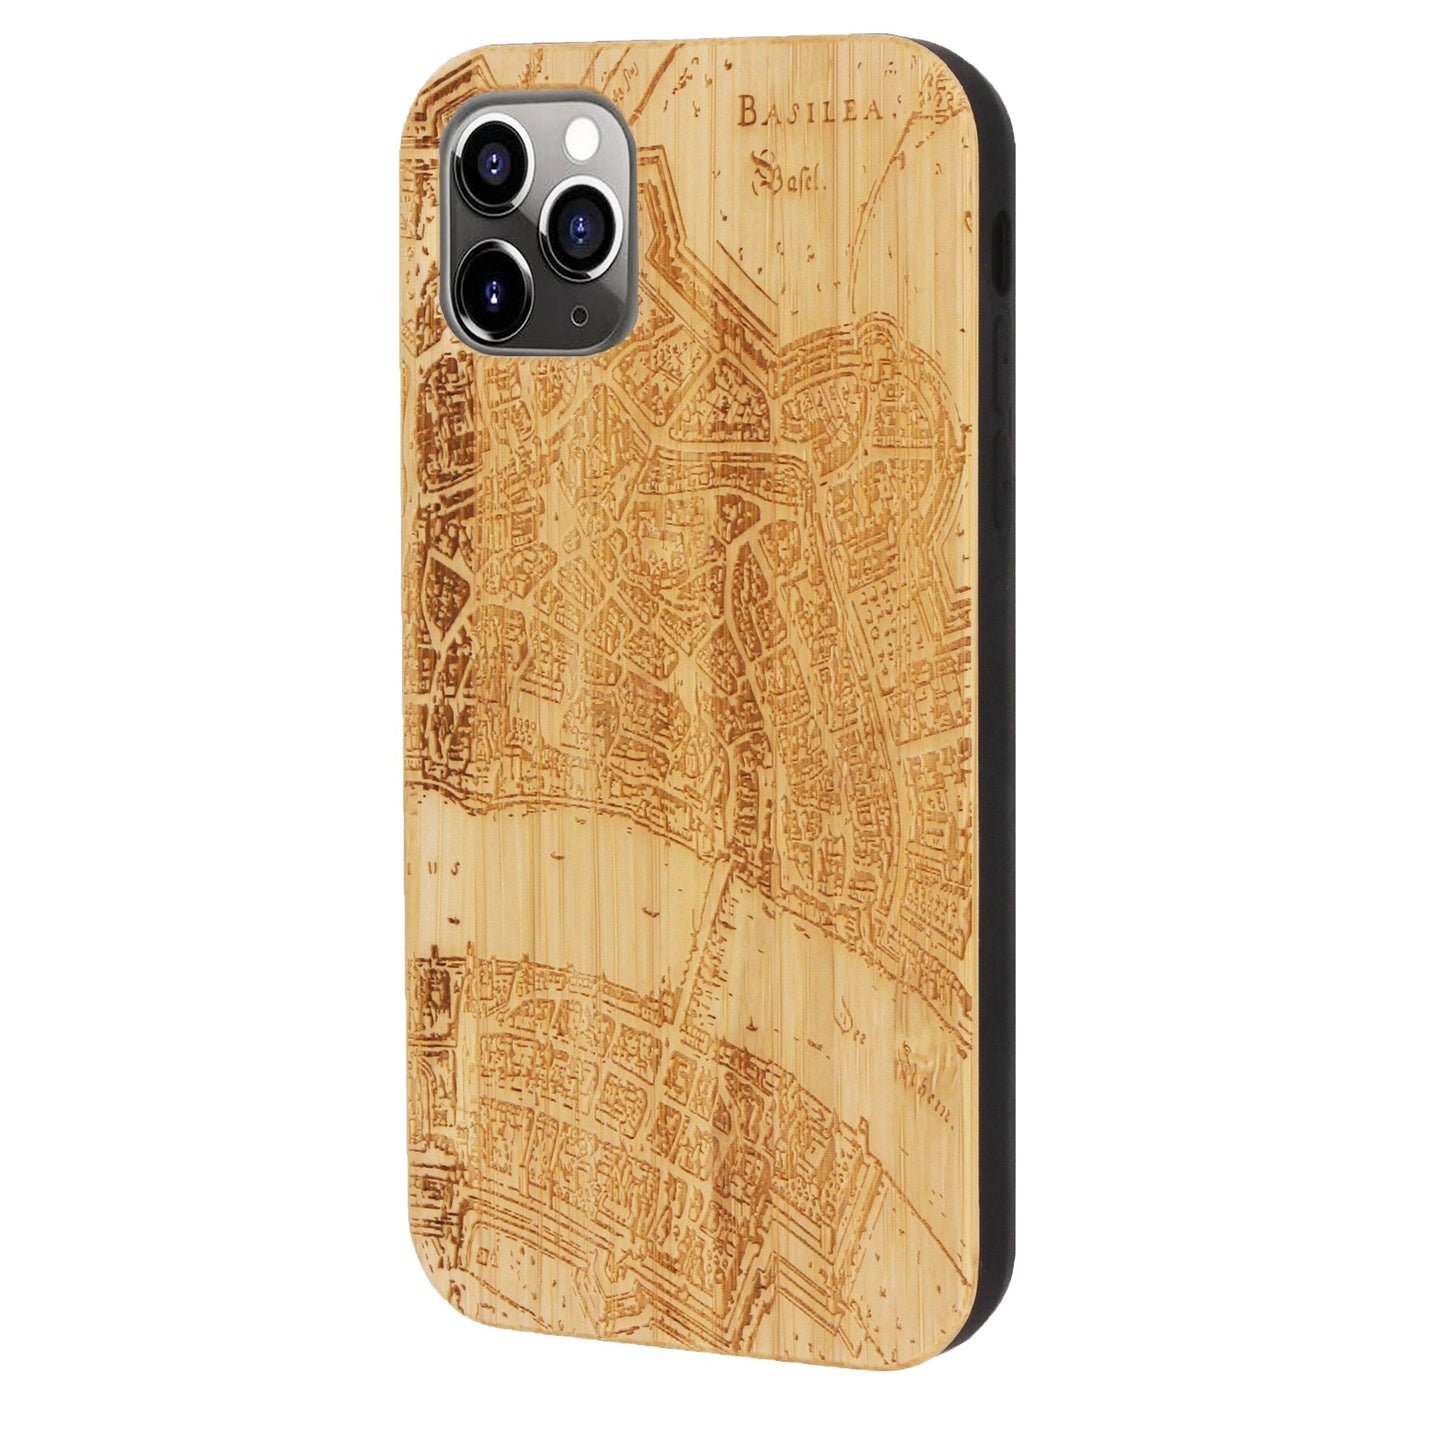 Basel Merian Eden Bamboo Case for iPhone 11 Pro